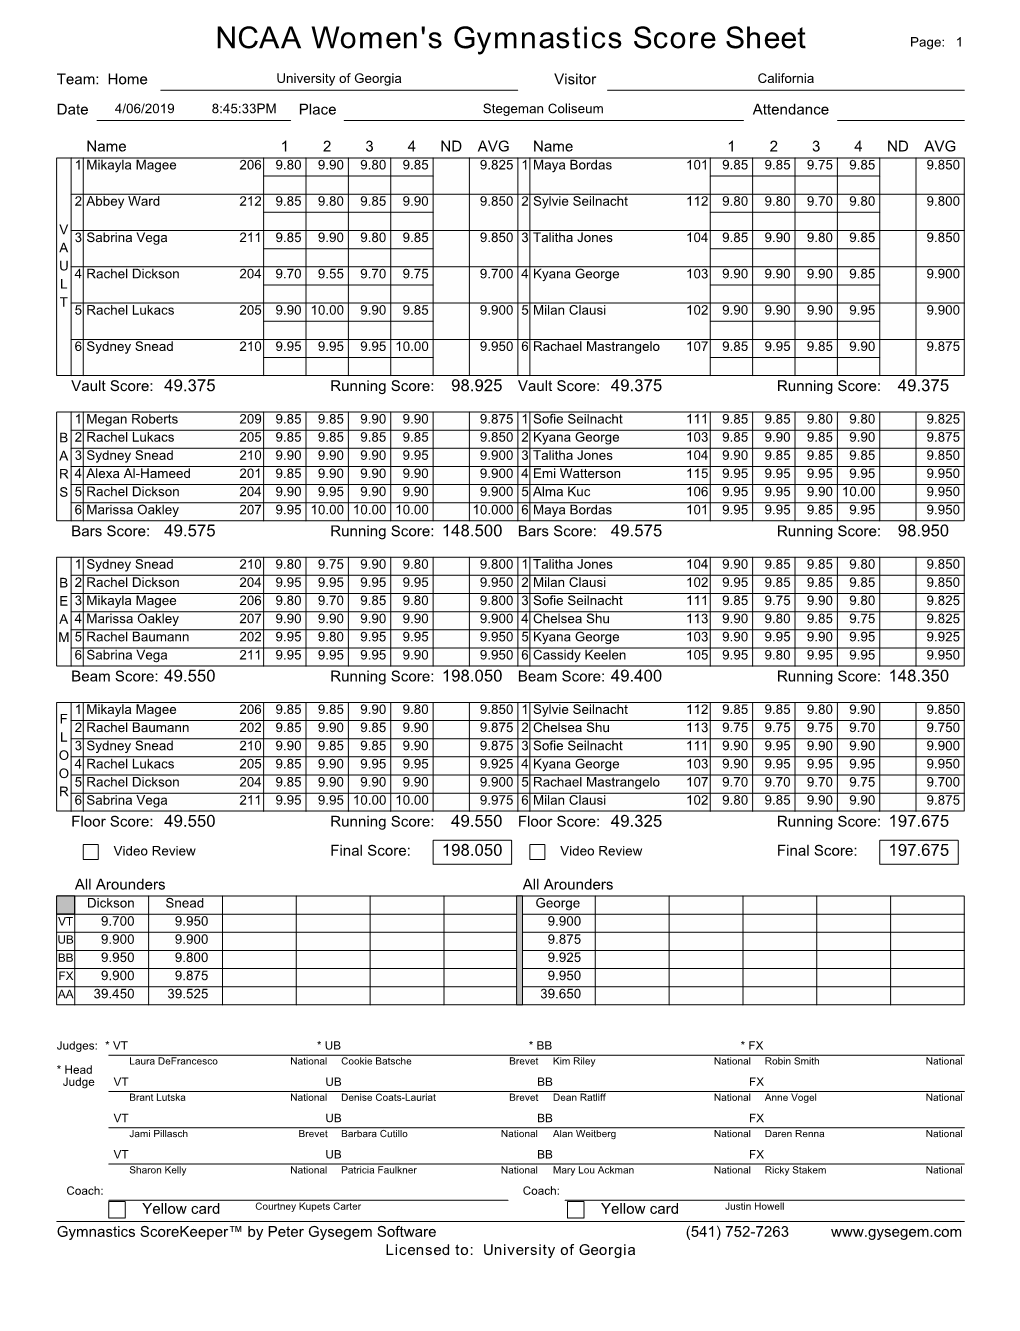 Women's Score Sheet 04-06-2019